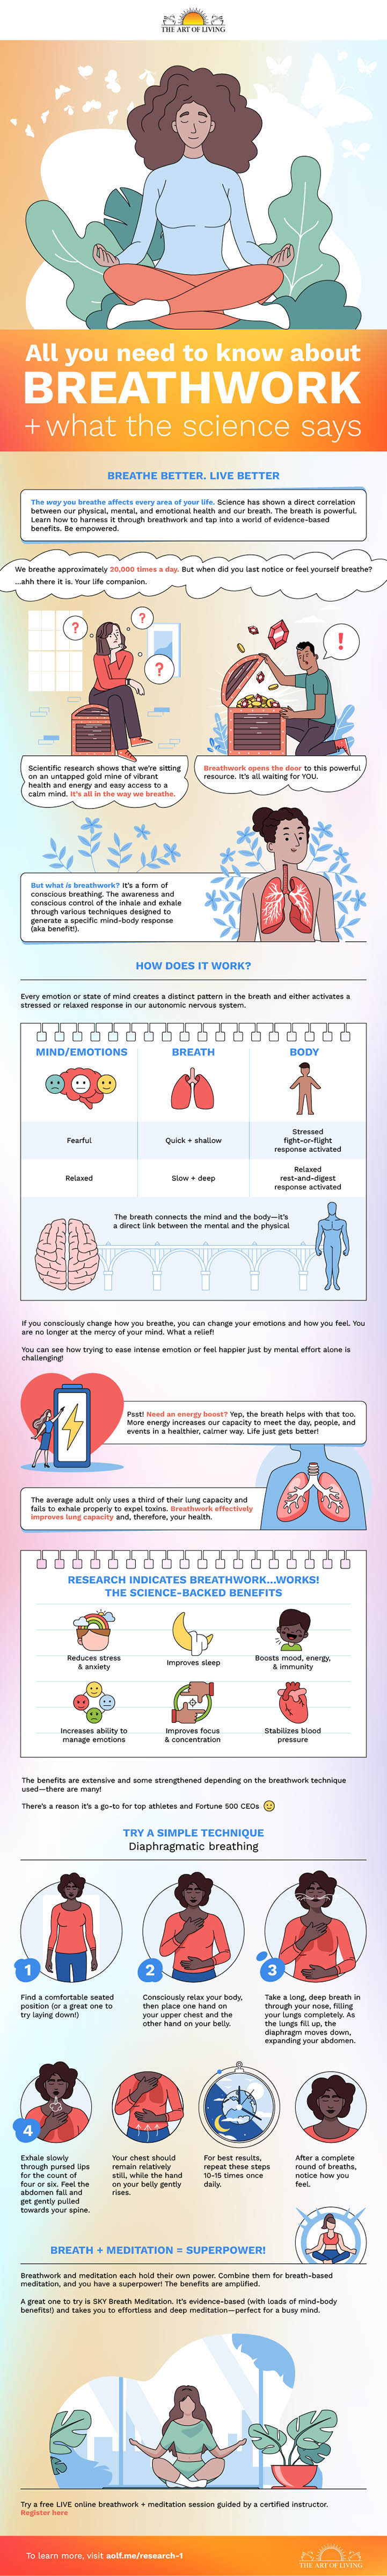 science of breathwork infographic